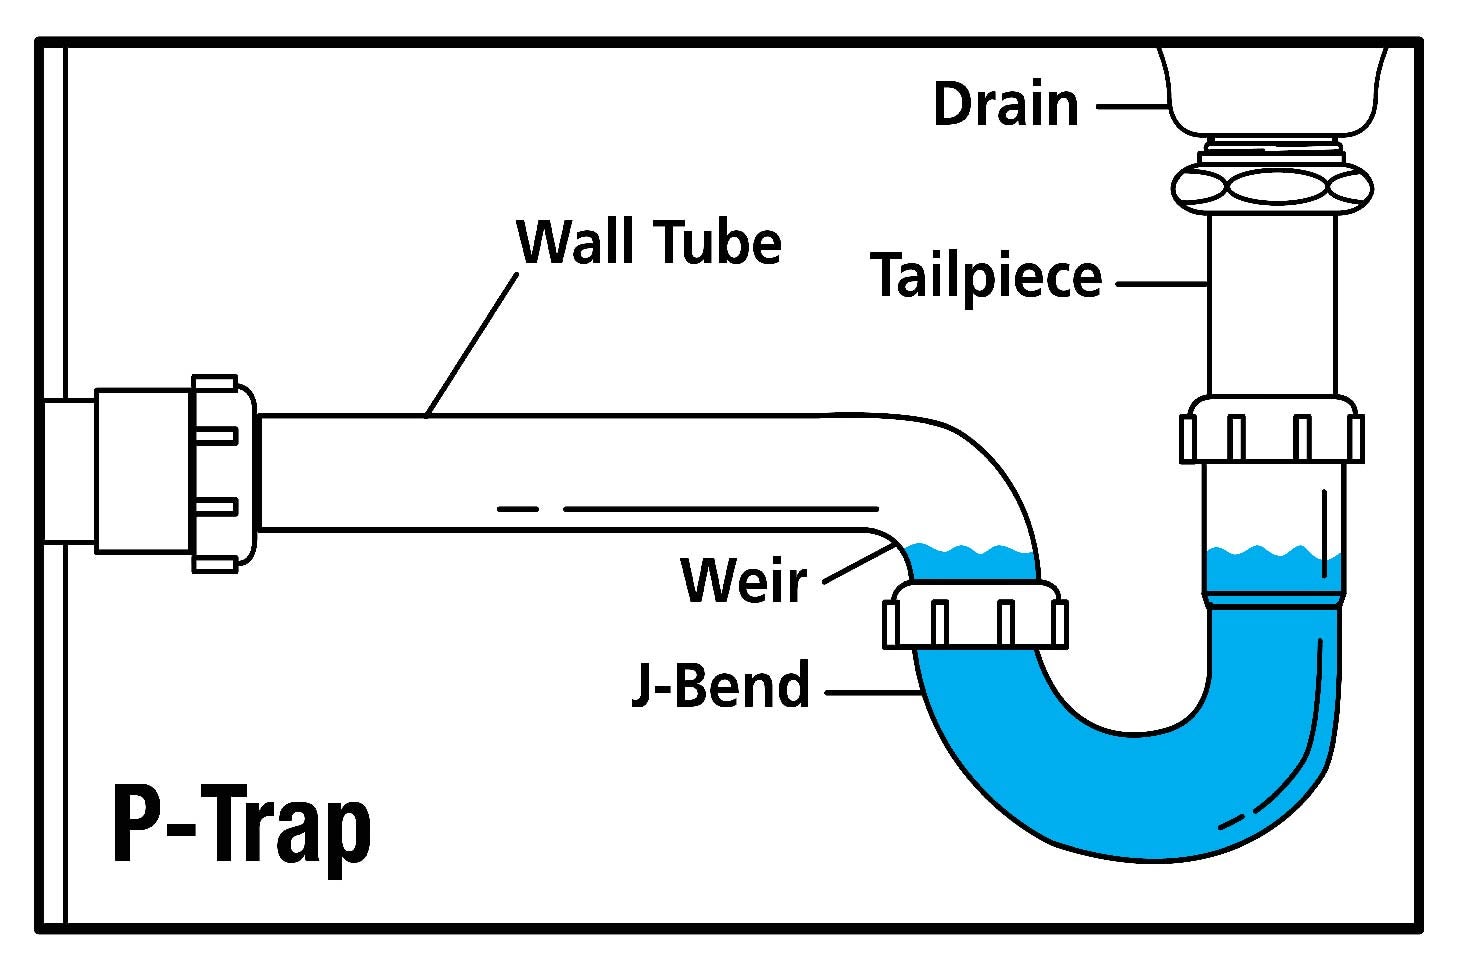 P-trap Install - Simple Drain